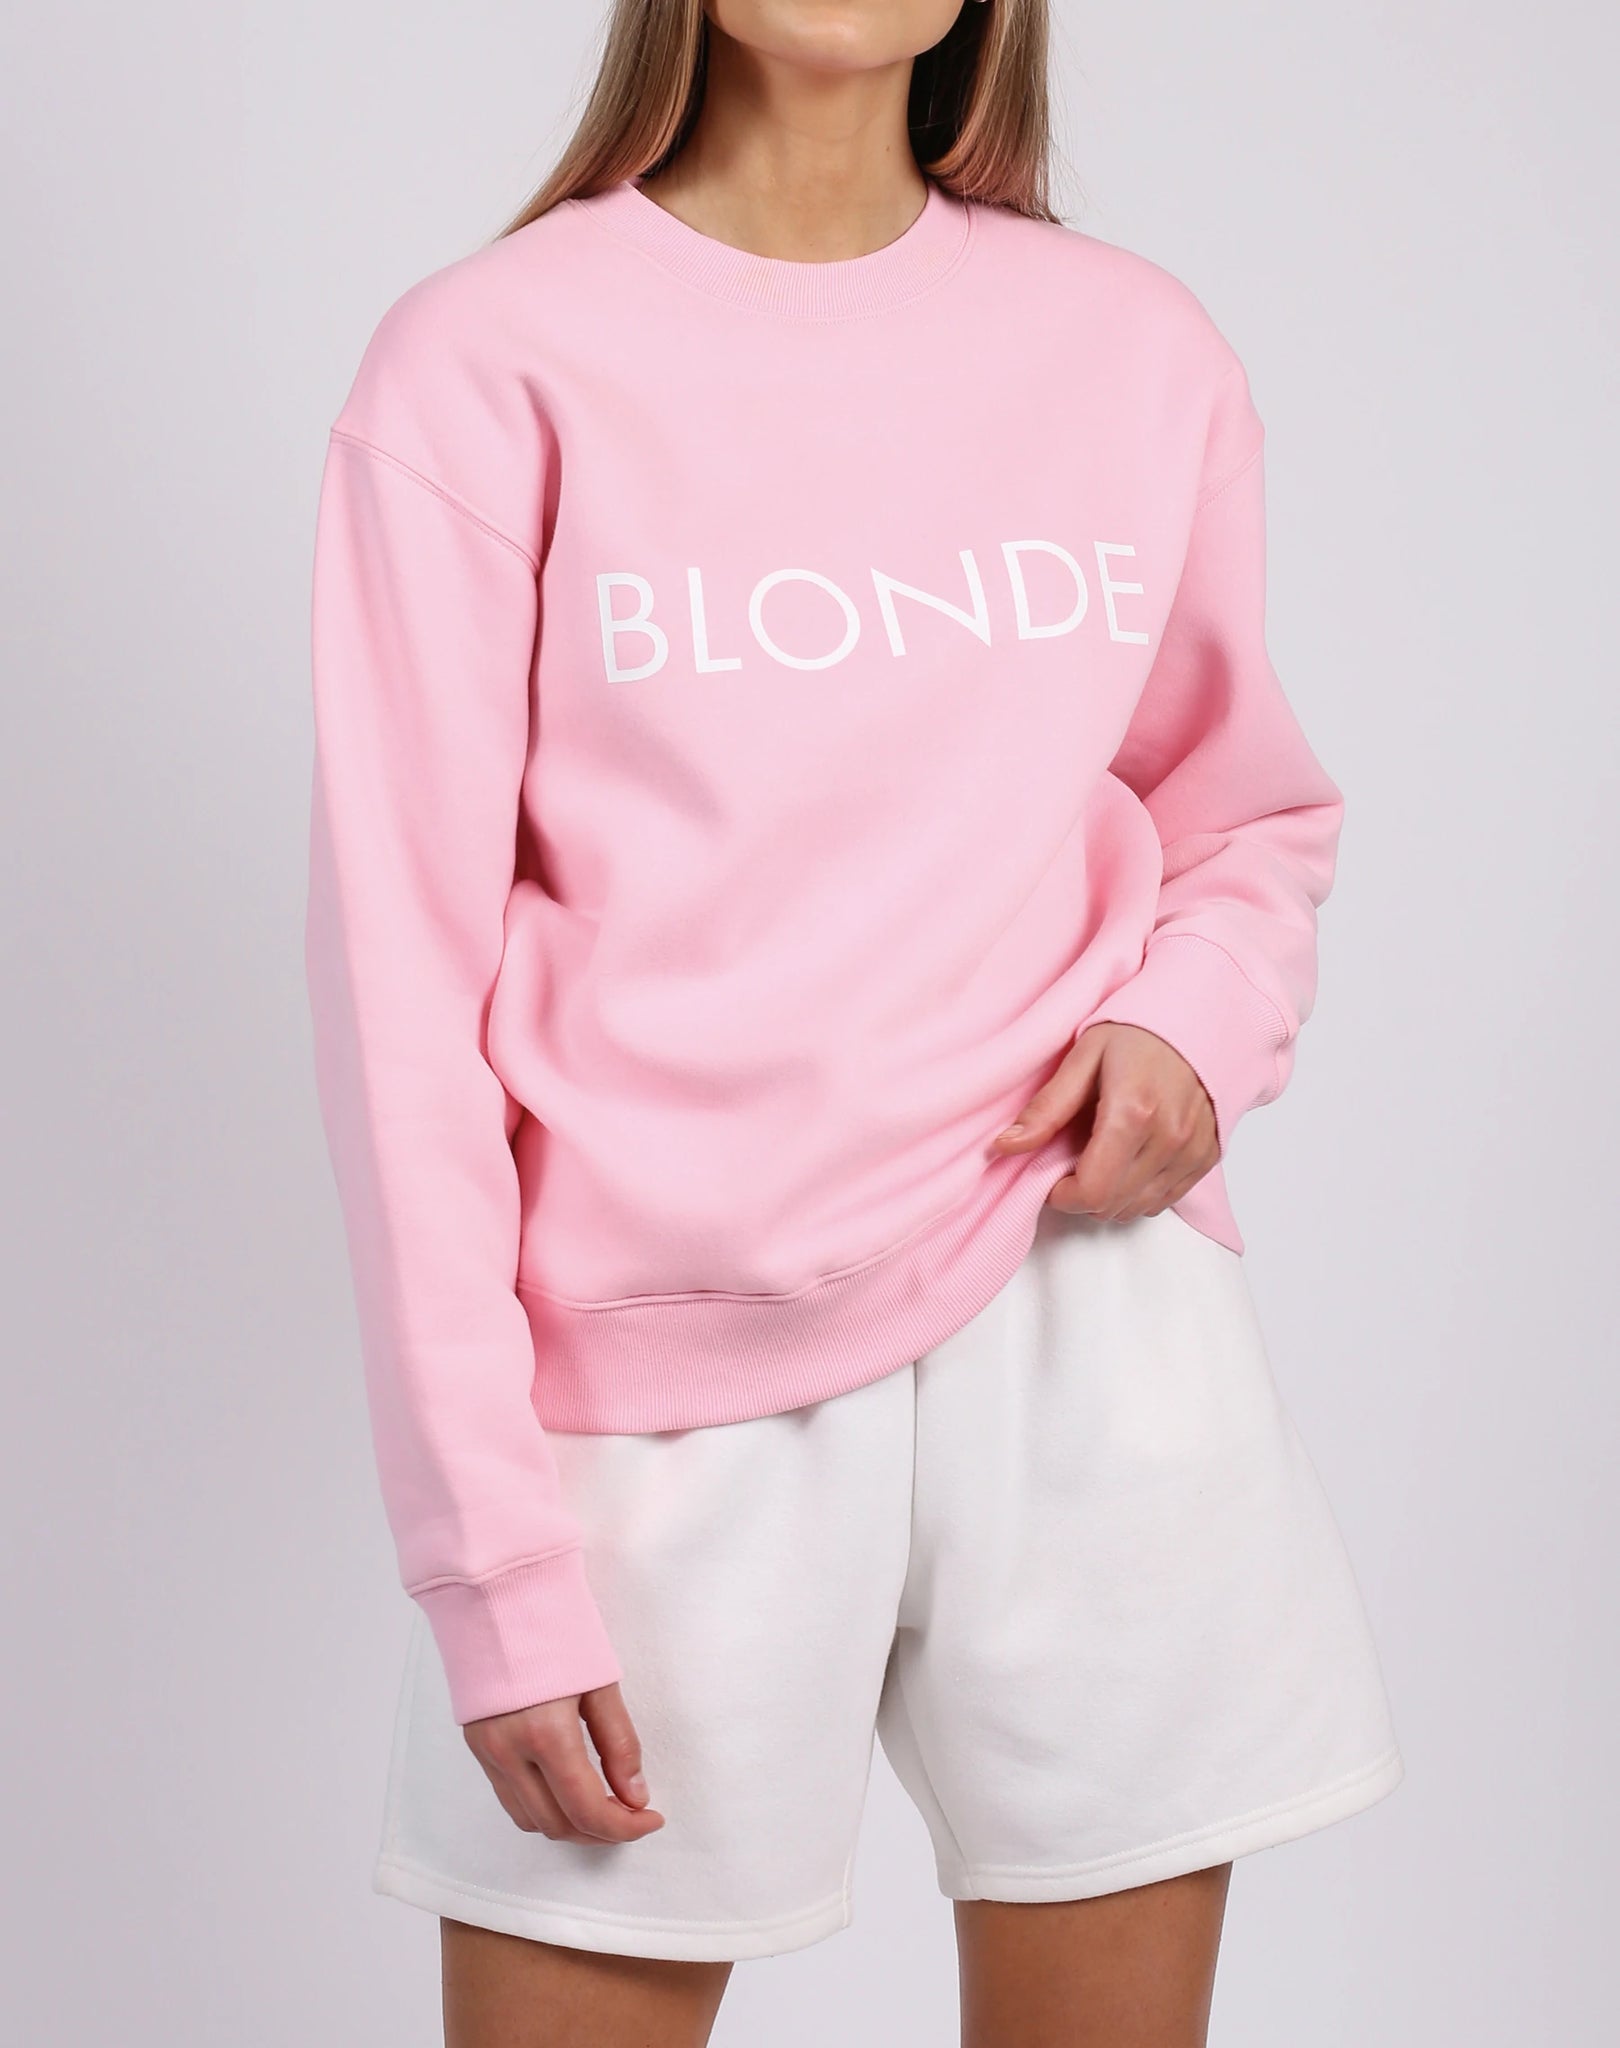 Classic Crew - "Blonde" | Bon Bon